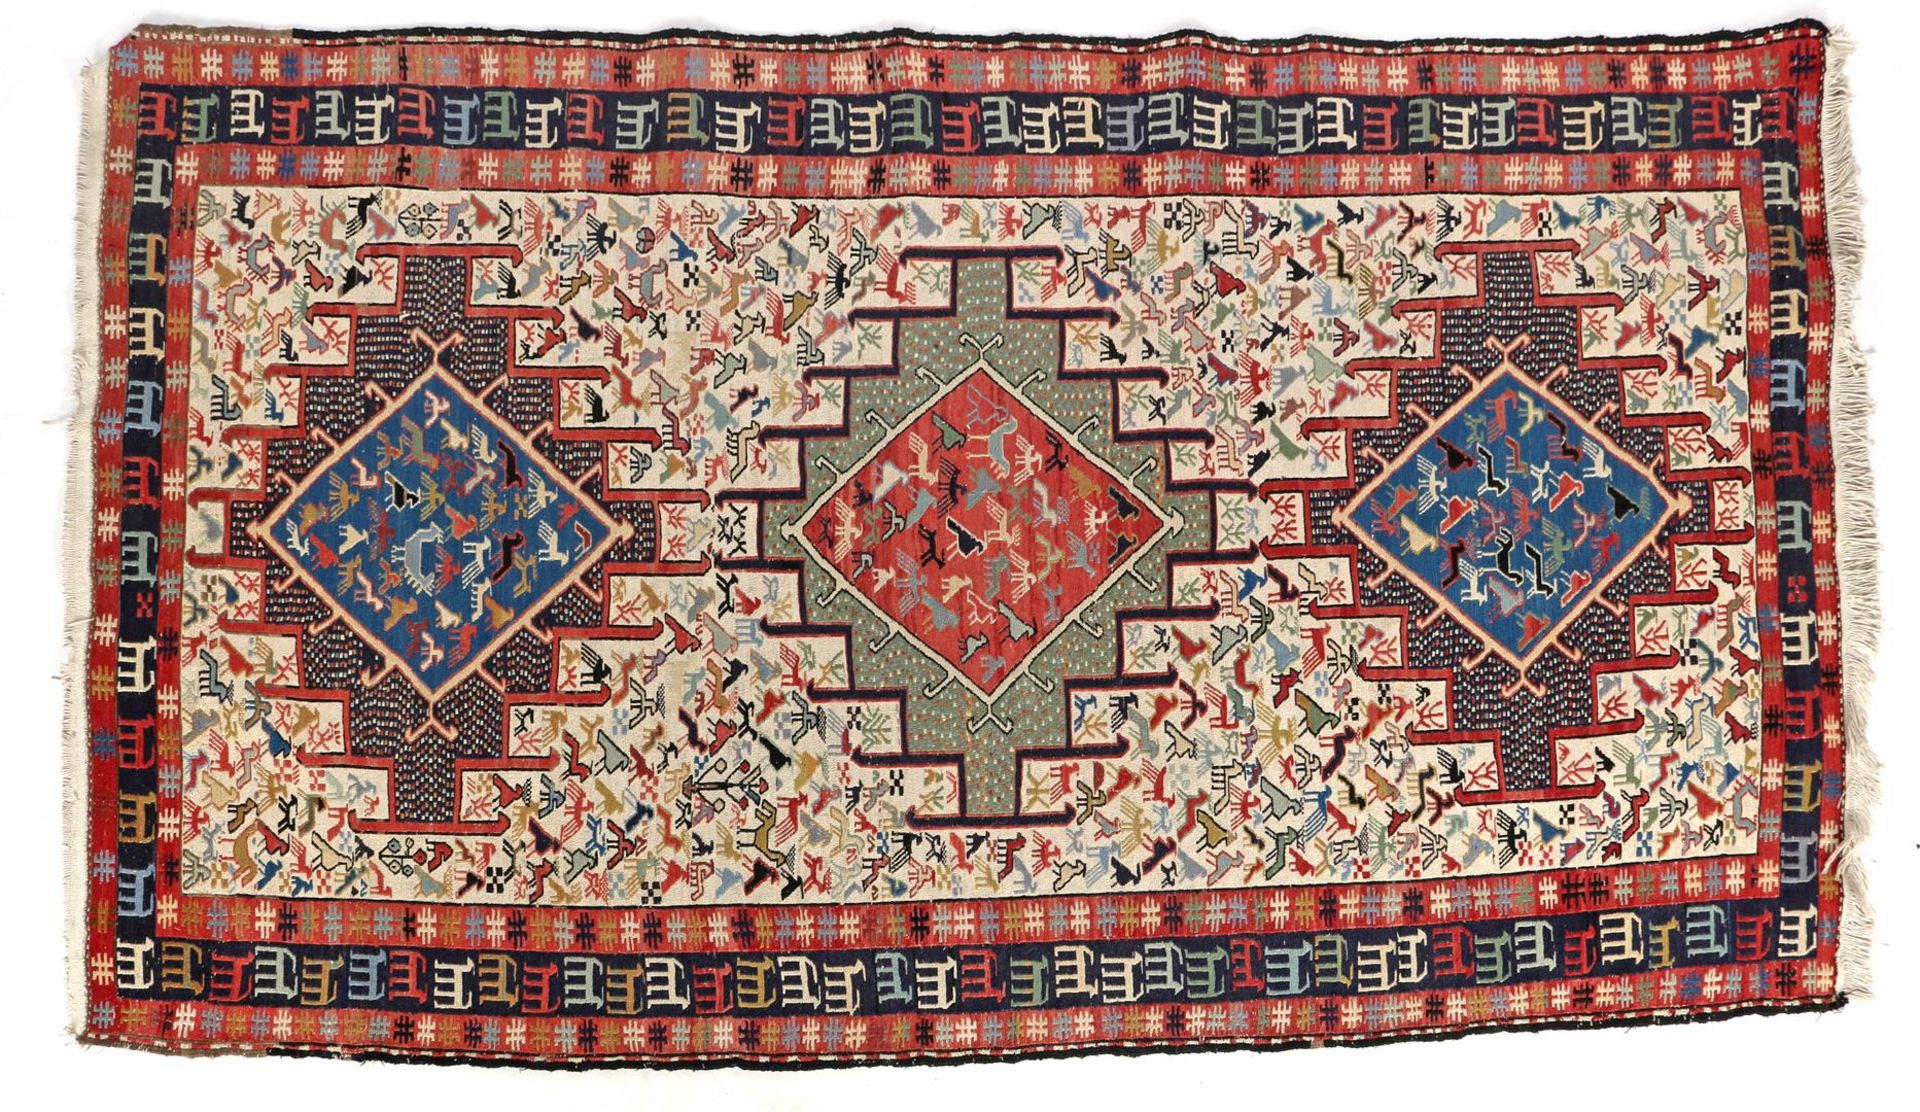 Hand-knotted kilim carpet